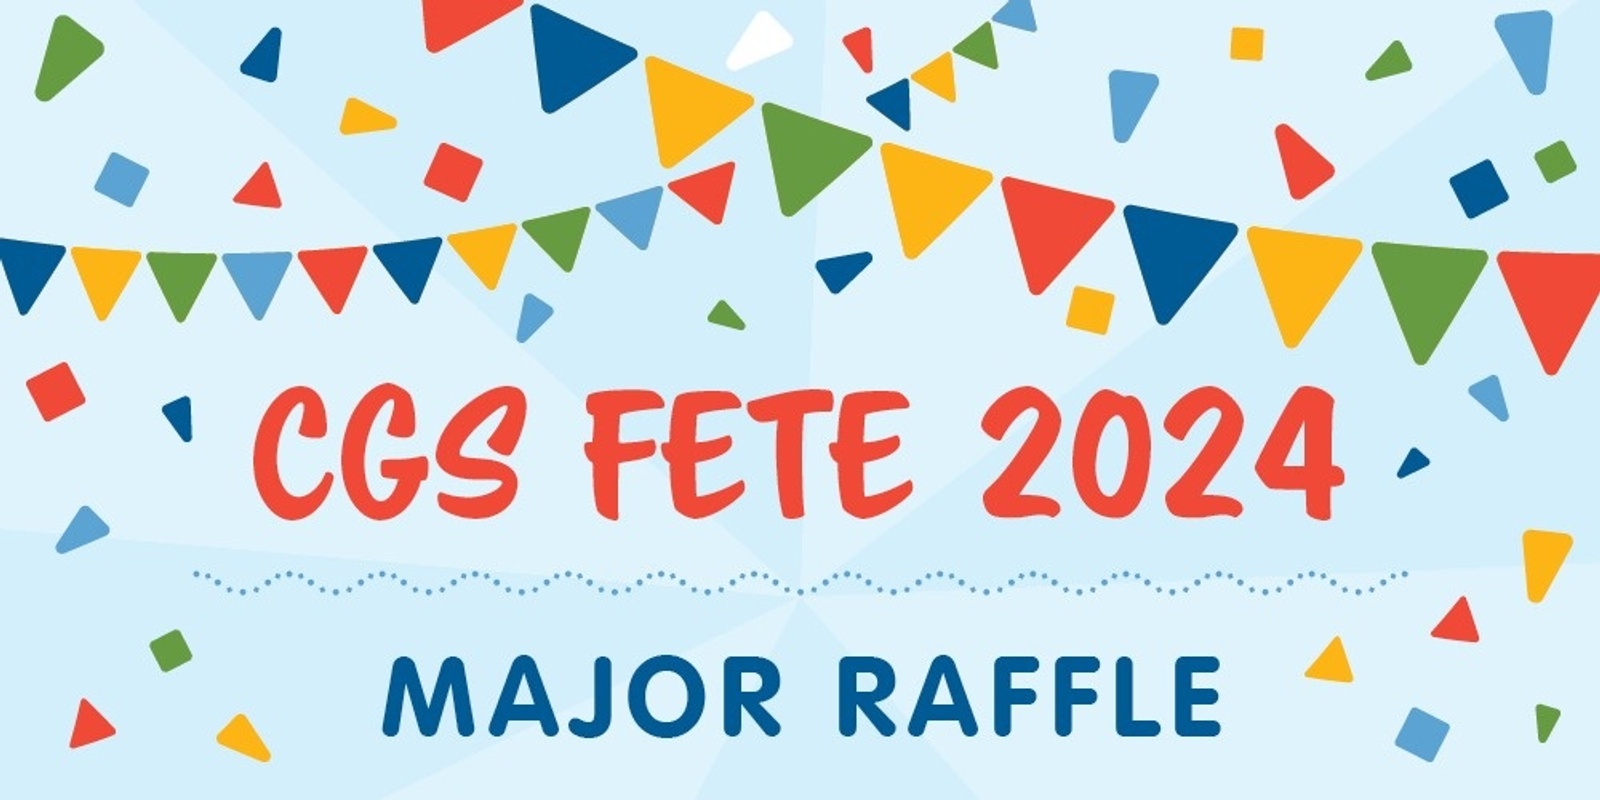 Banner image for CGS Fete Major Raffle 2024